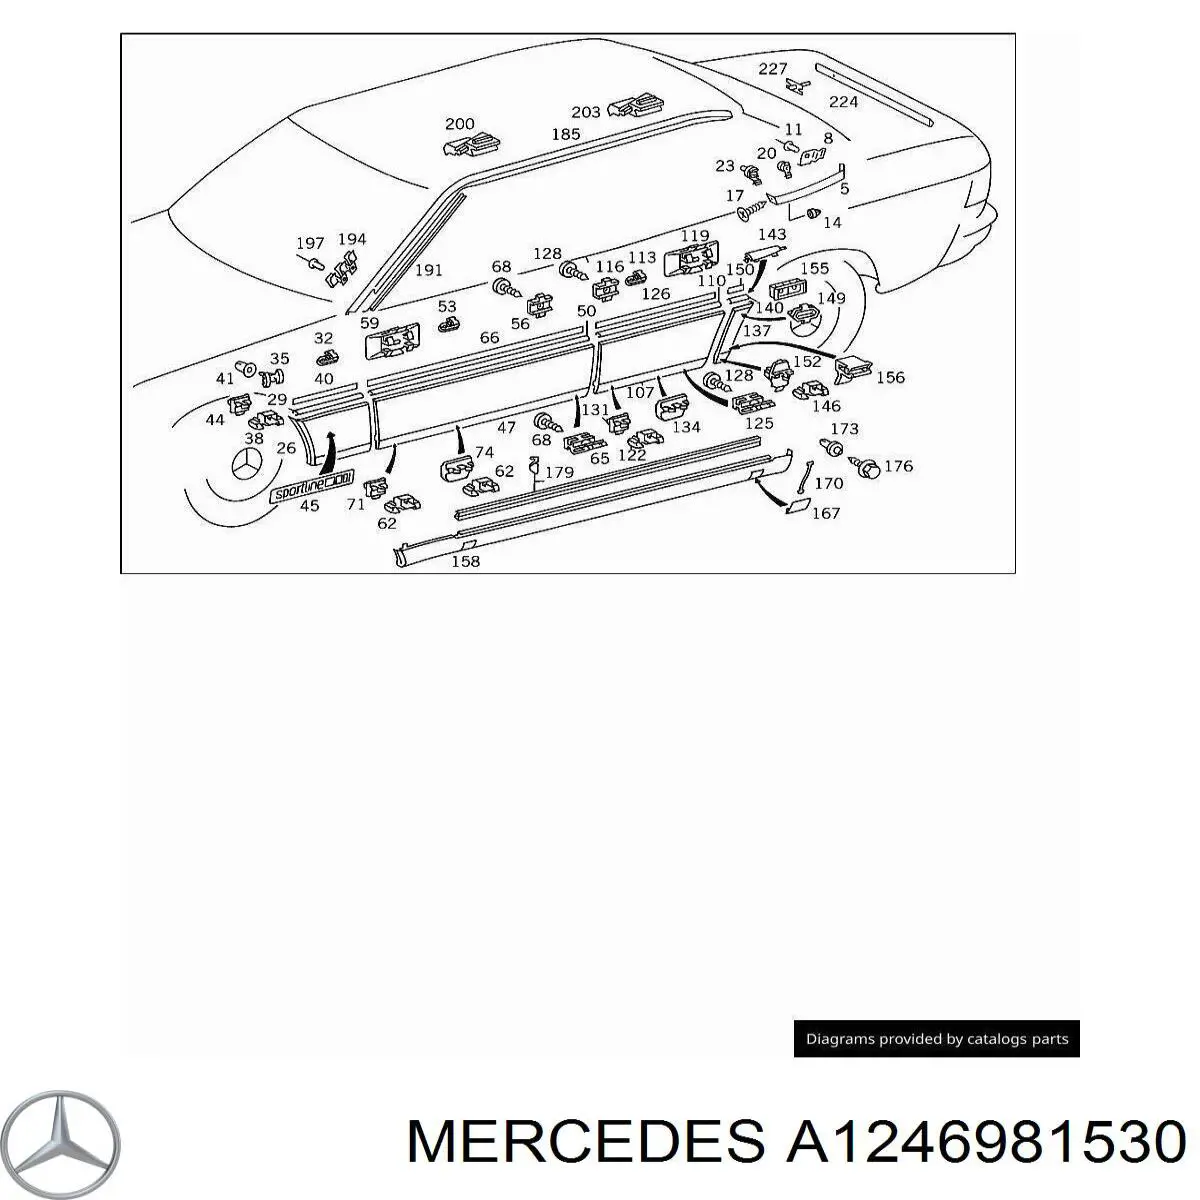 A1246981530 Mercedes ajuste extrerior trasero izquierdo